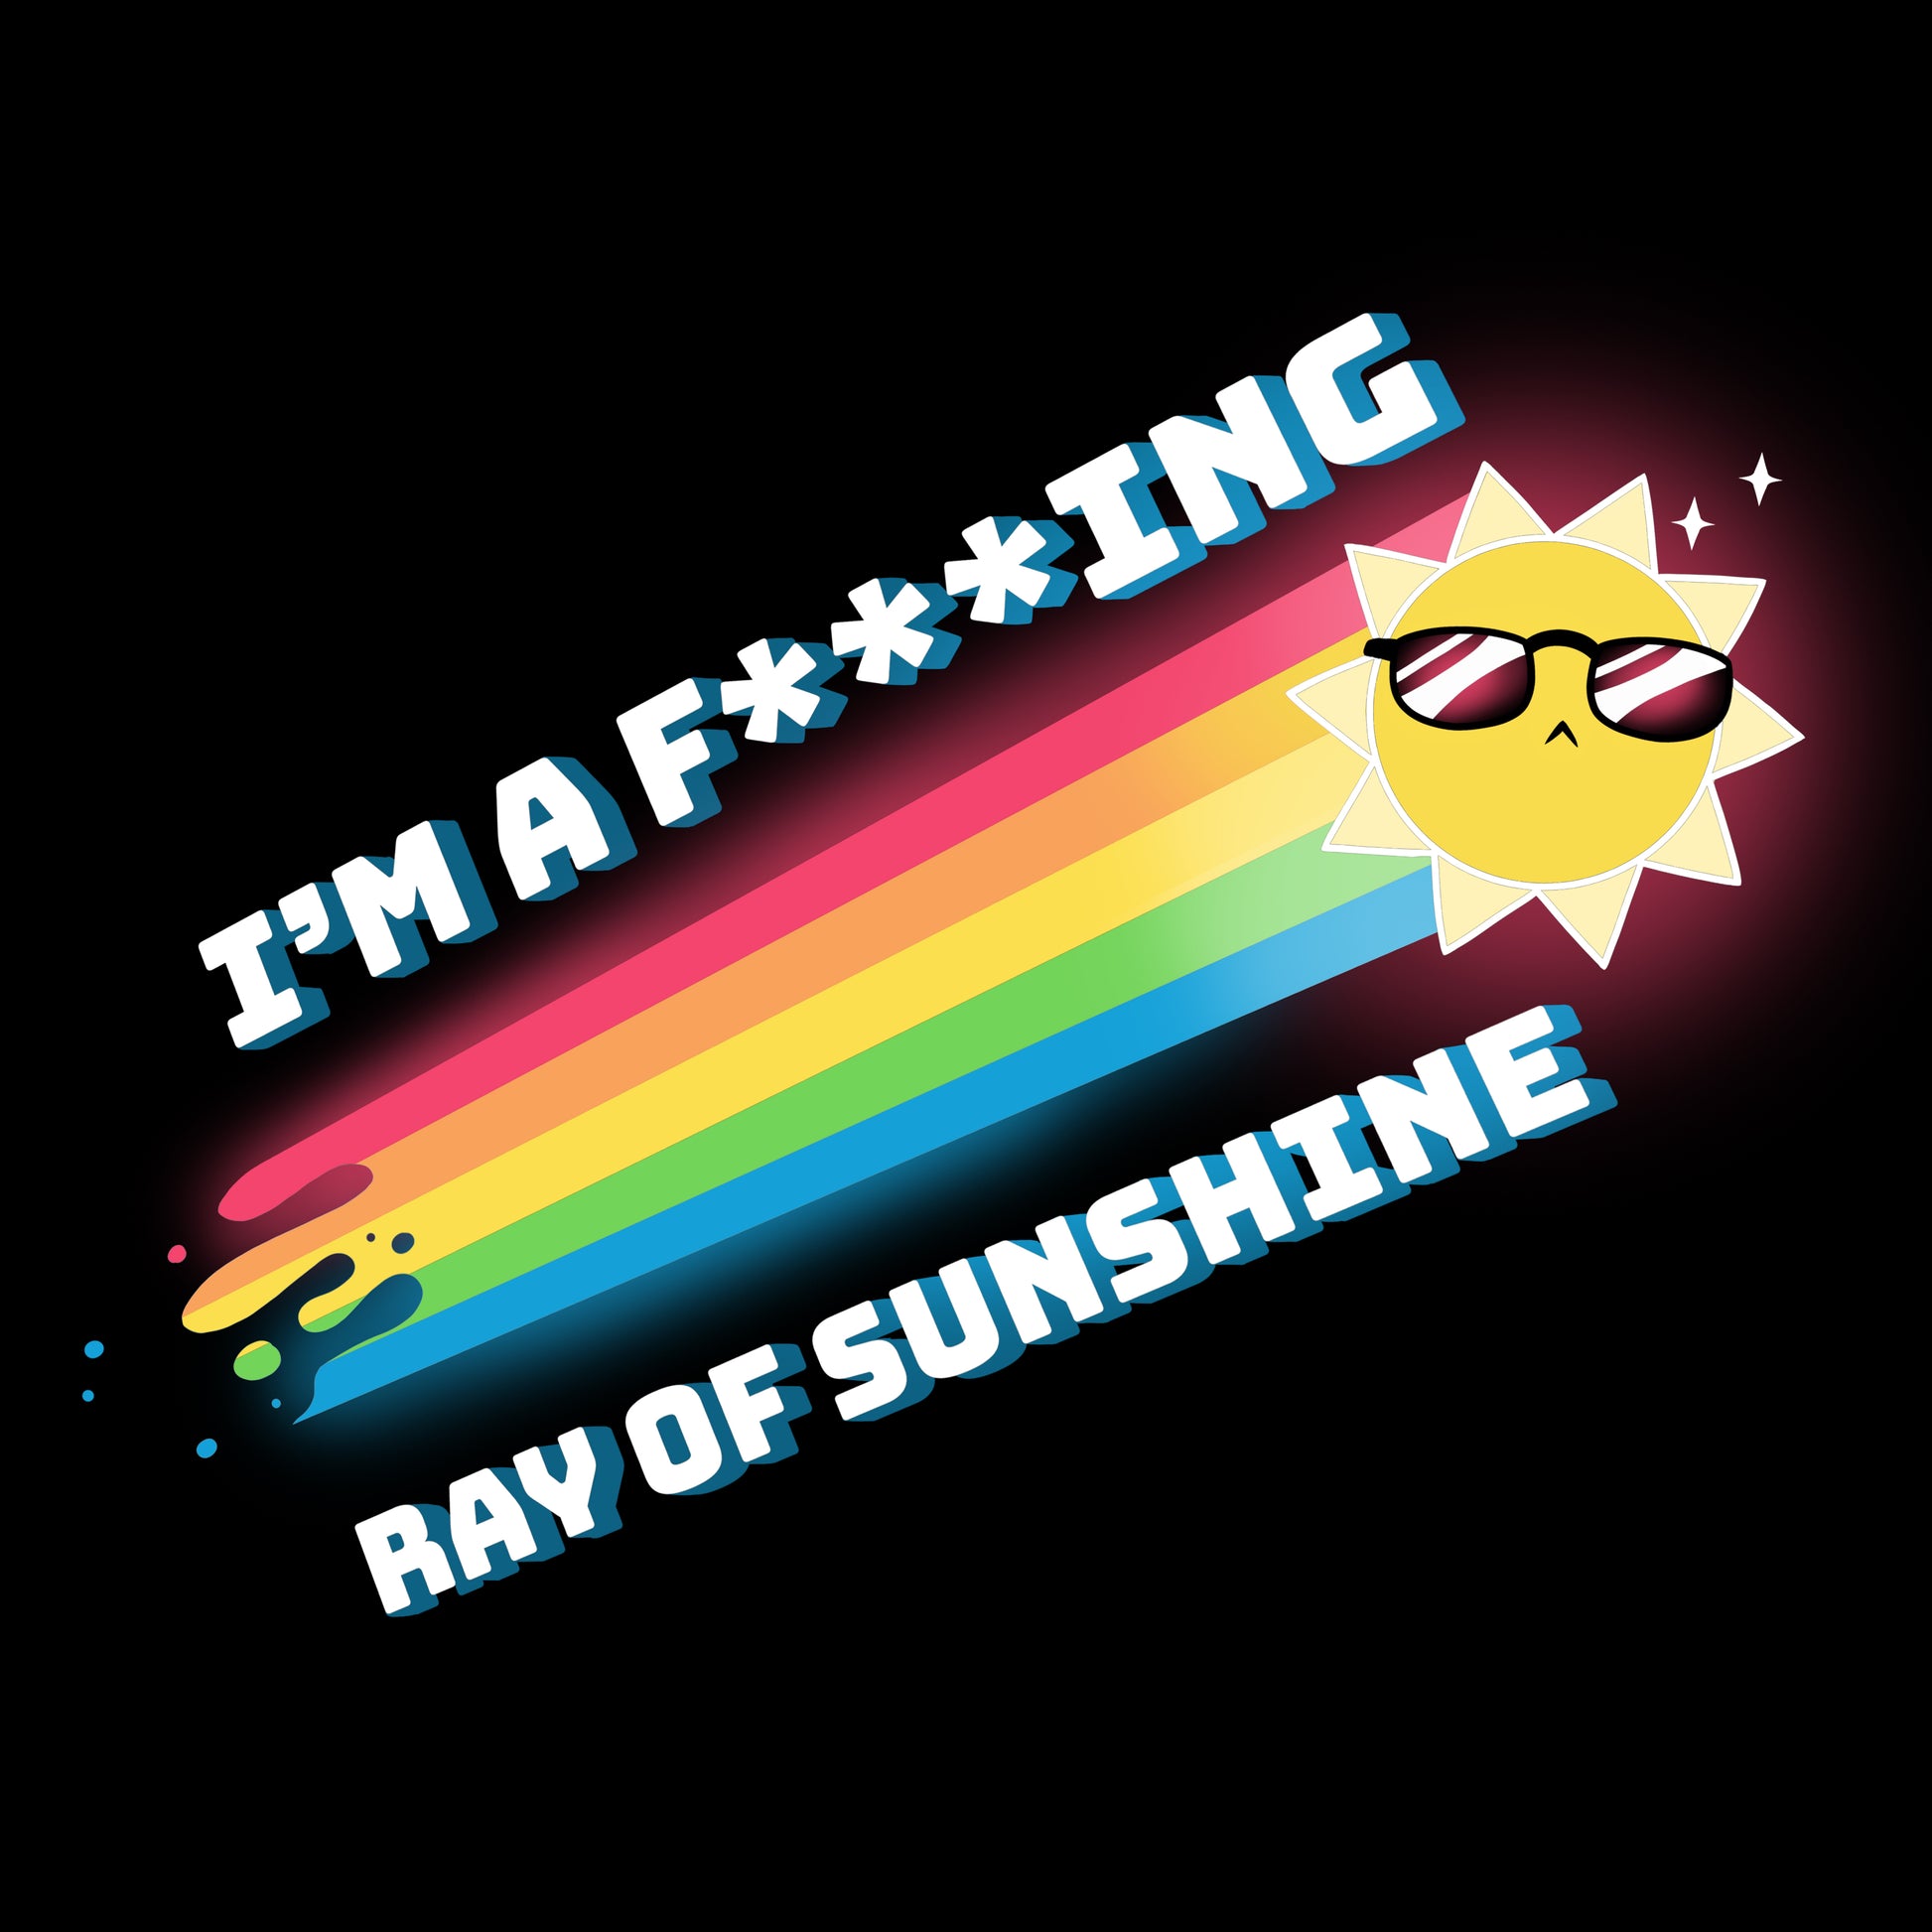 TeeTurtle's "I'm a F***ing Ray of Sunshine" black t-shirt.